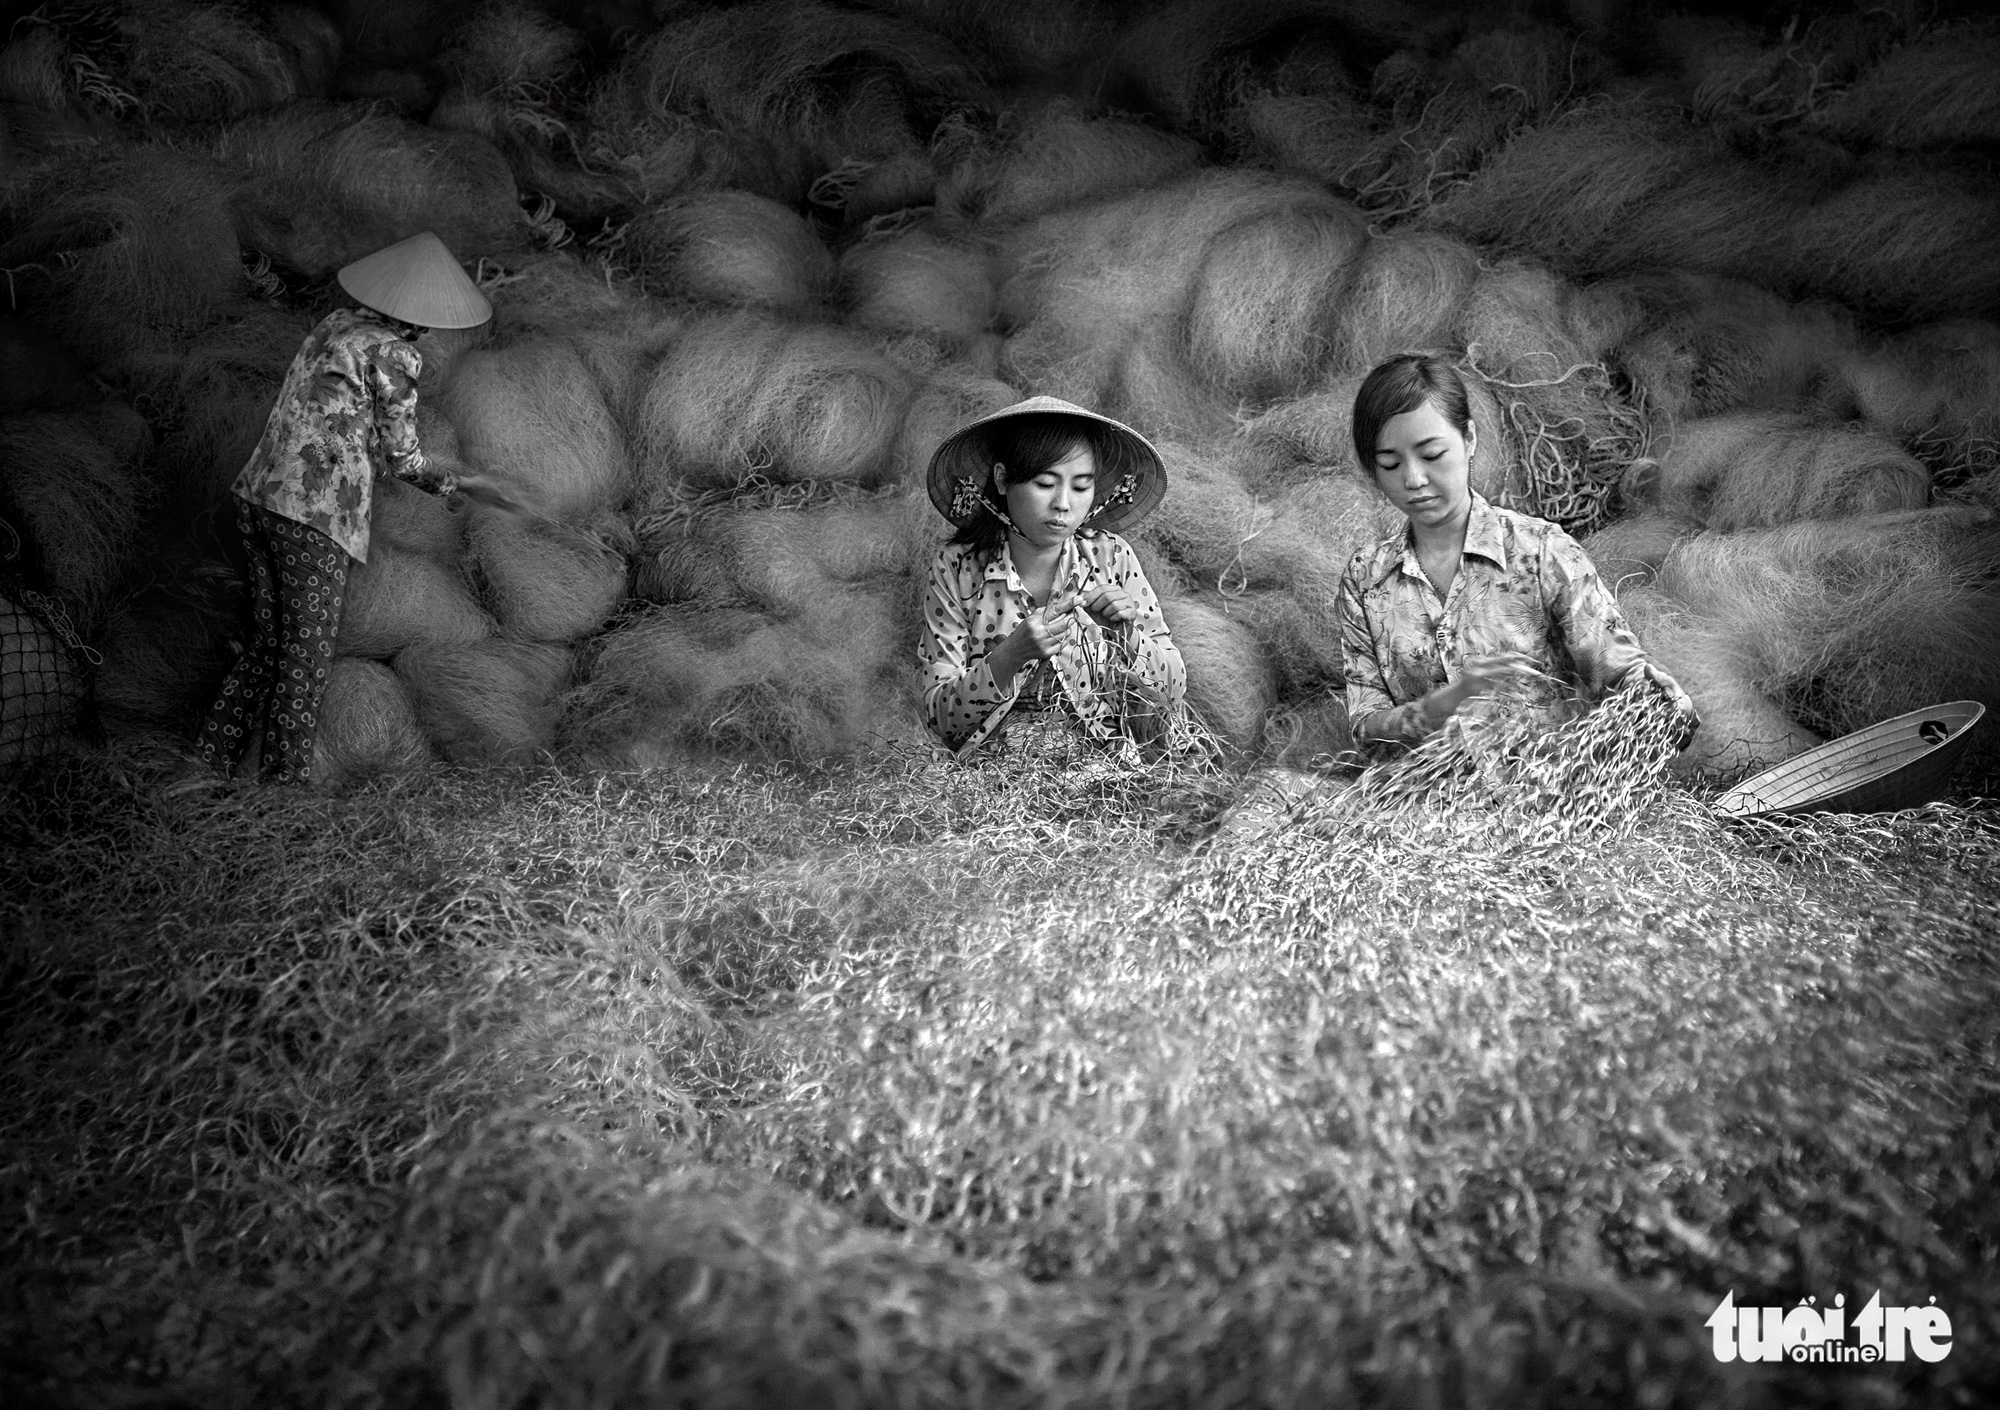 Vietnamese women prepare fishing nets. Photo: Dao Tien Dat